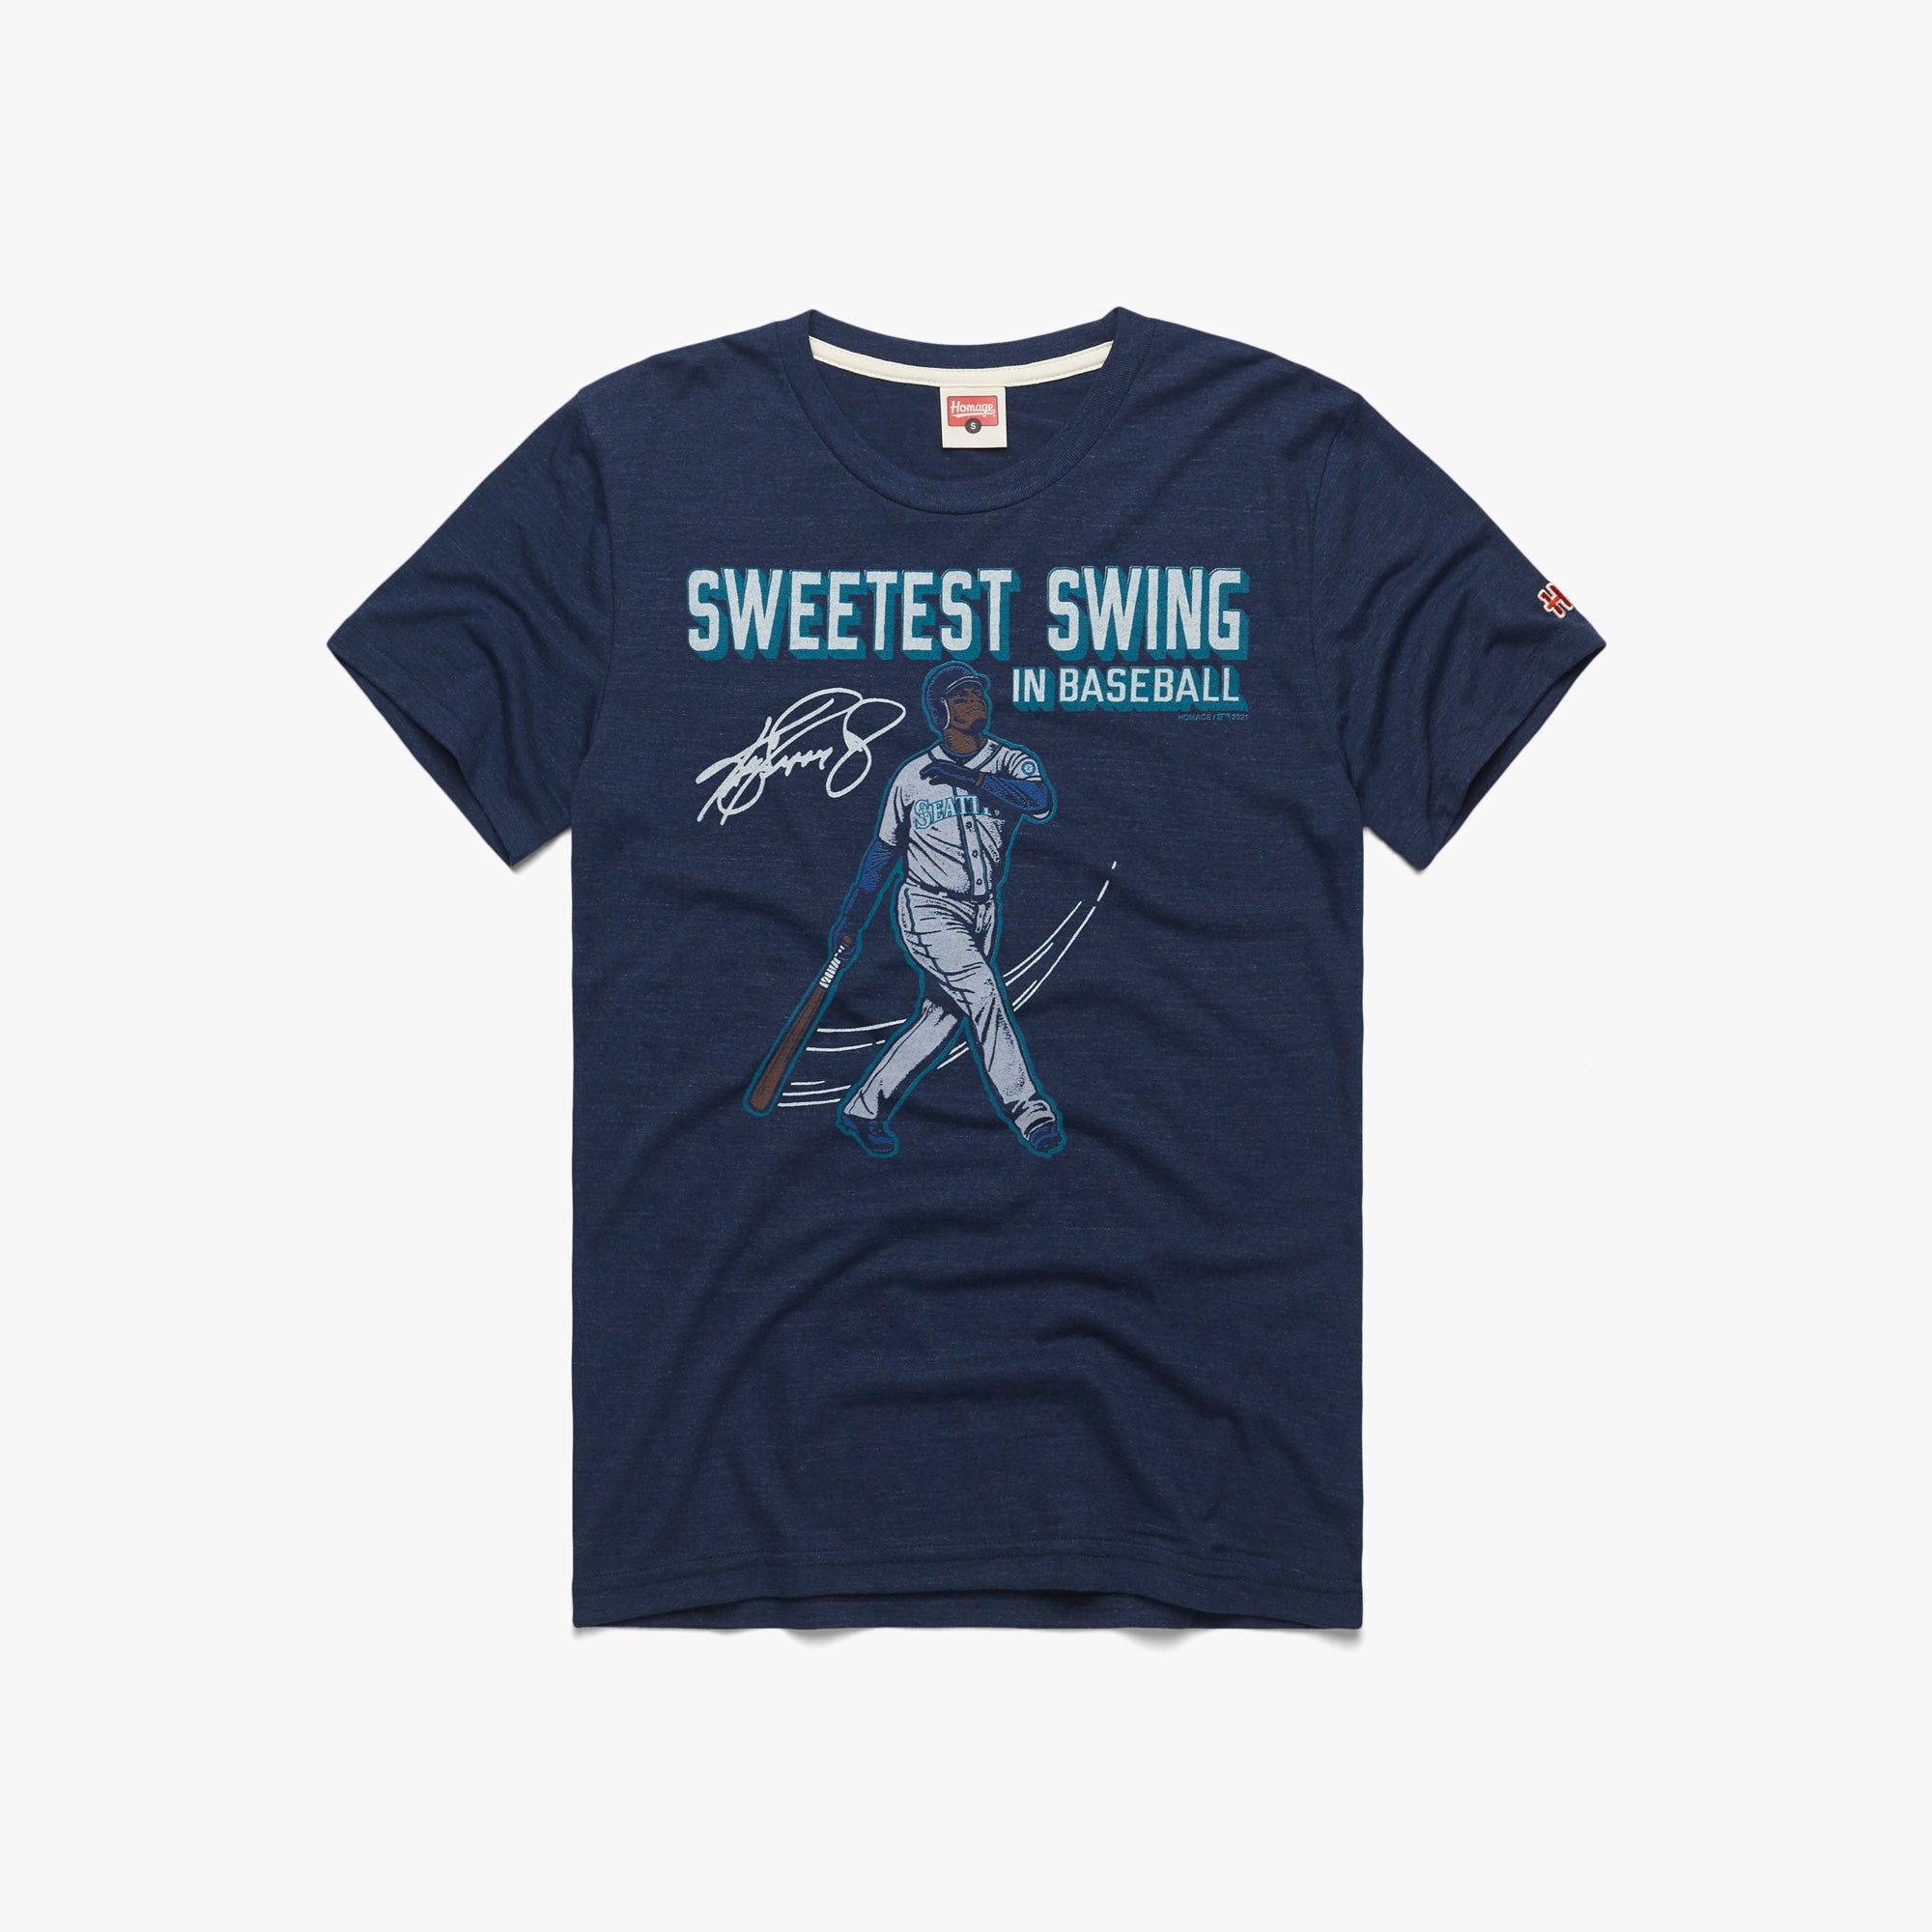 Original Teambrown Ken Griffey Jr. Baseball Hall Of Fame Member Signature  T-shirt,Sweater, Hoodie, And Long Sleeved, Ladies, Tank Top